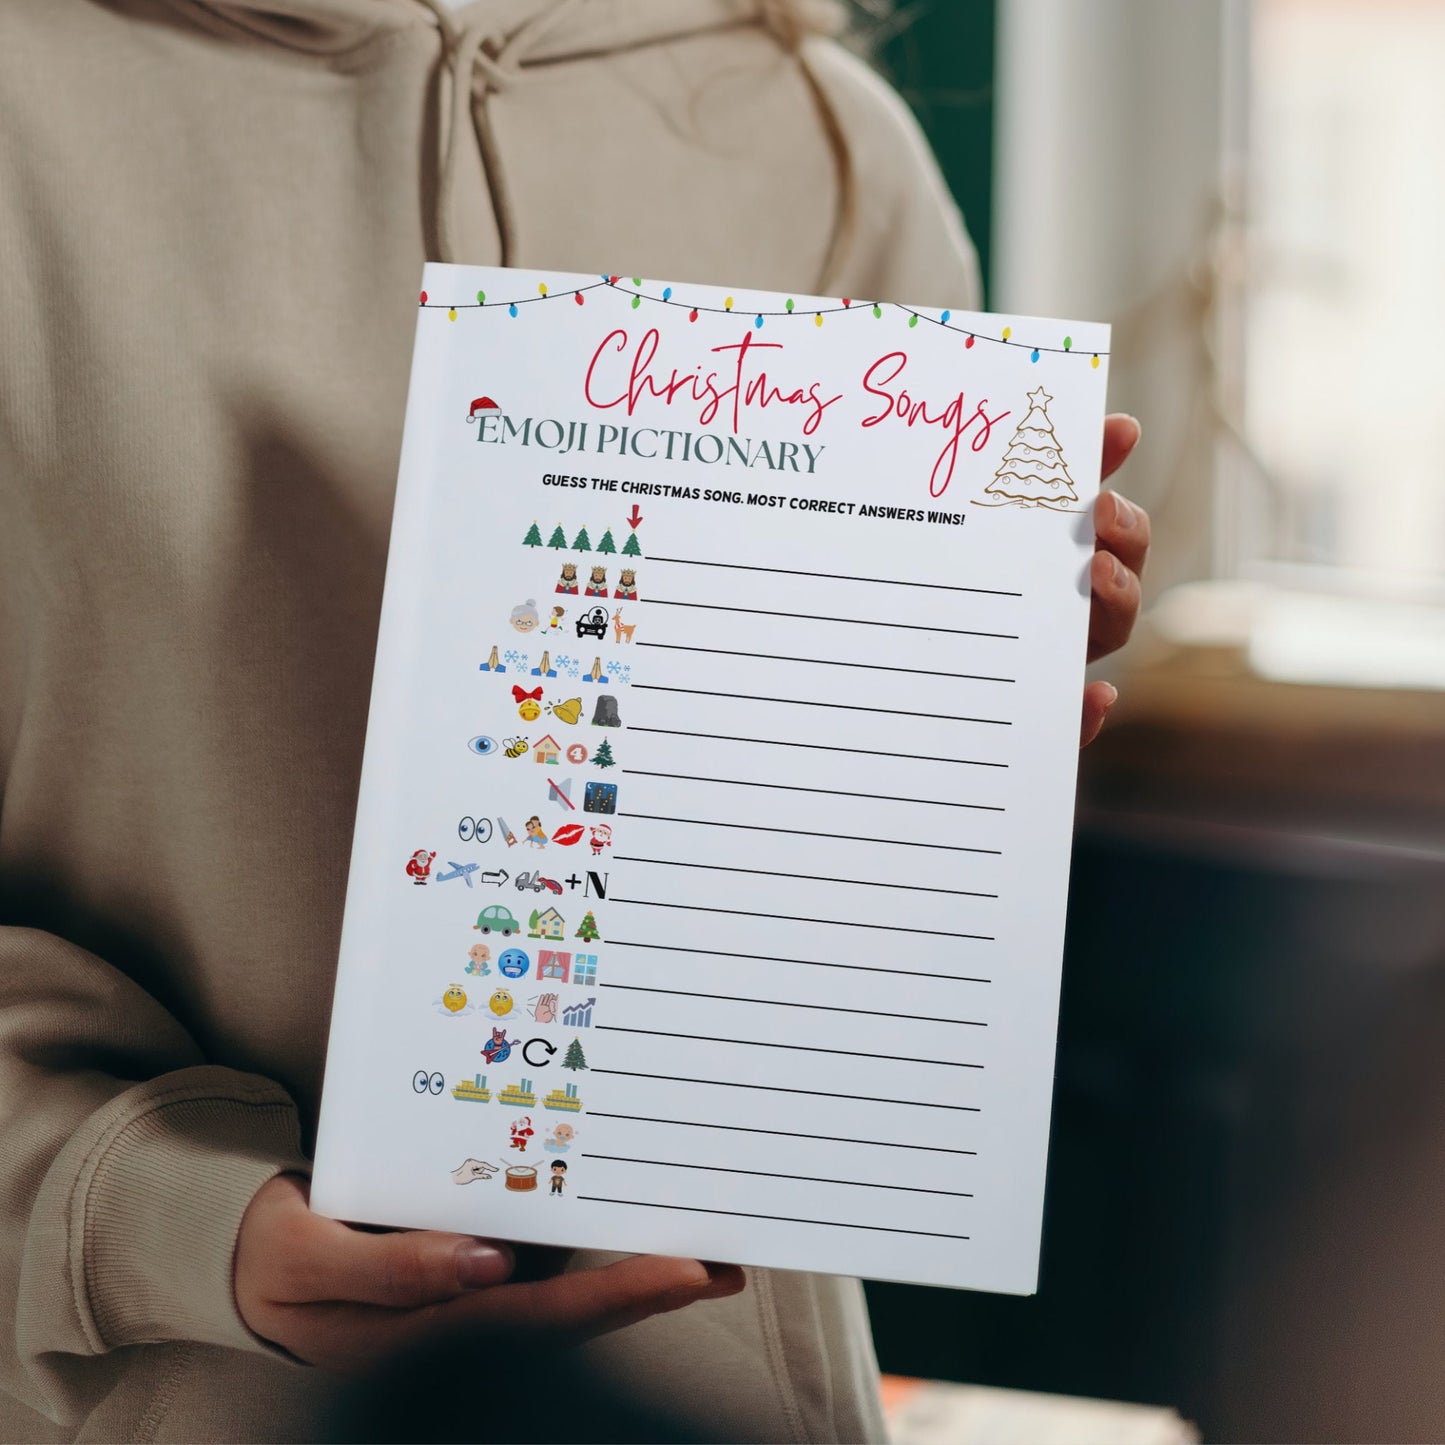 Christmas Emoji Pictionary Bundle, Printable Fun Party Game, Emoji Quiz, Office Game, Family Game, Classroom Game, Song Movie Phrase Emoji